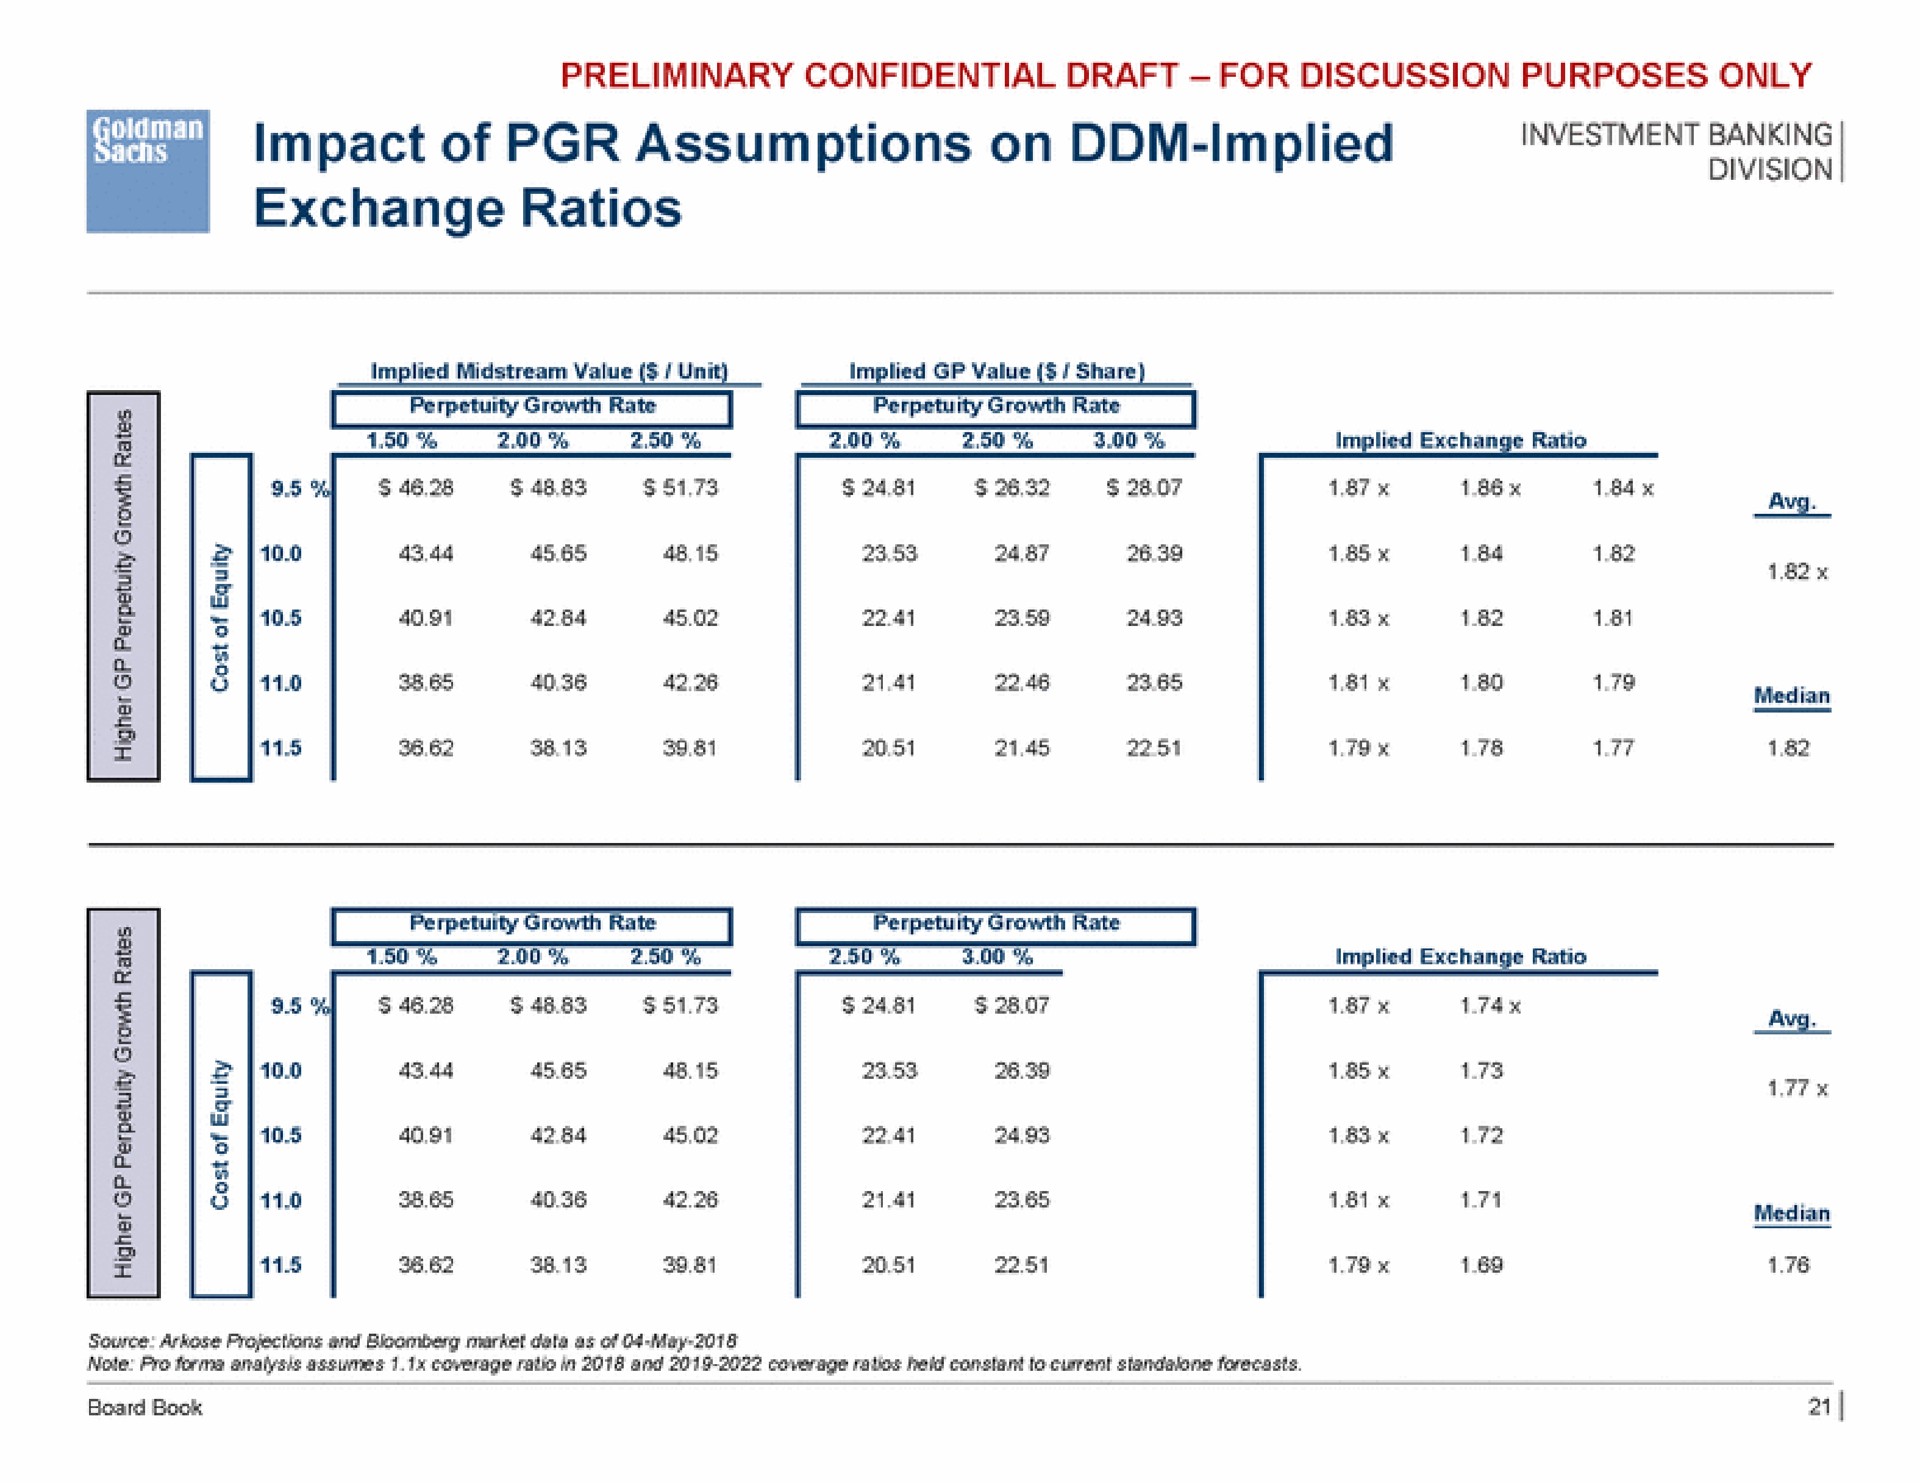 impact of assumptions on implied exchange ratios | Goldman Sachs